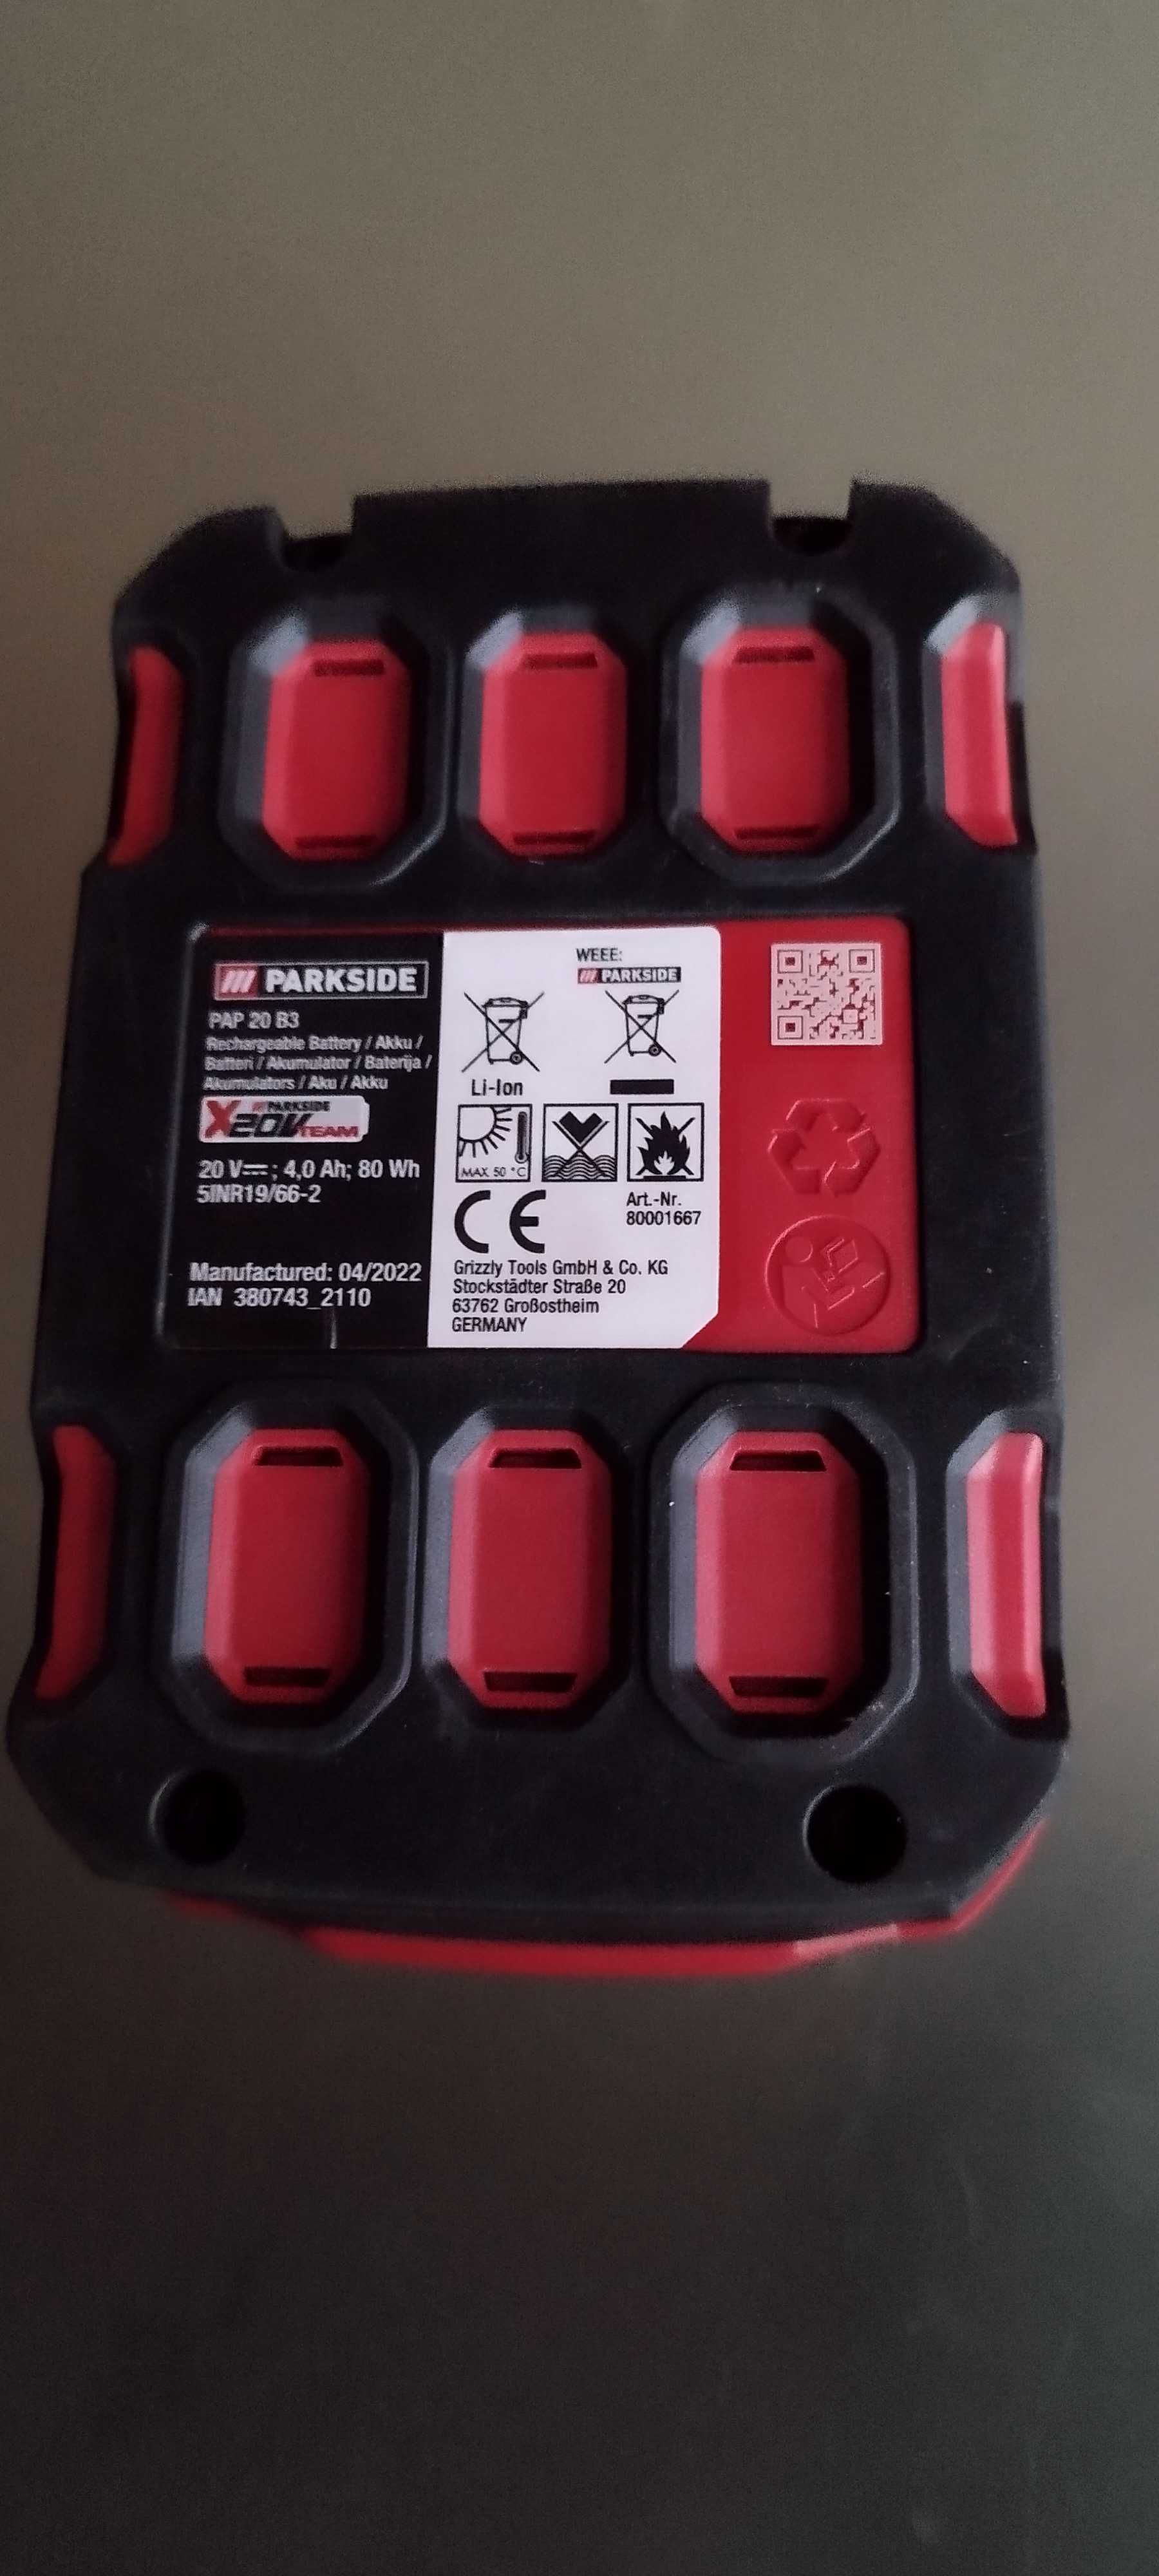 Akumulator PARKSIDE Akumulator PAP 20 B3, 4 Ah, 20 V